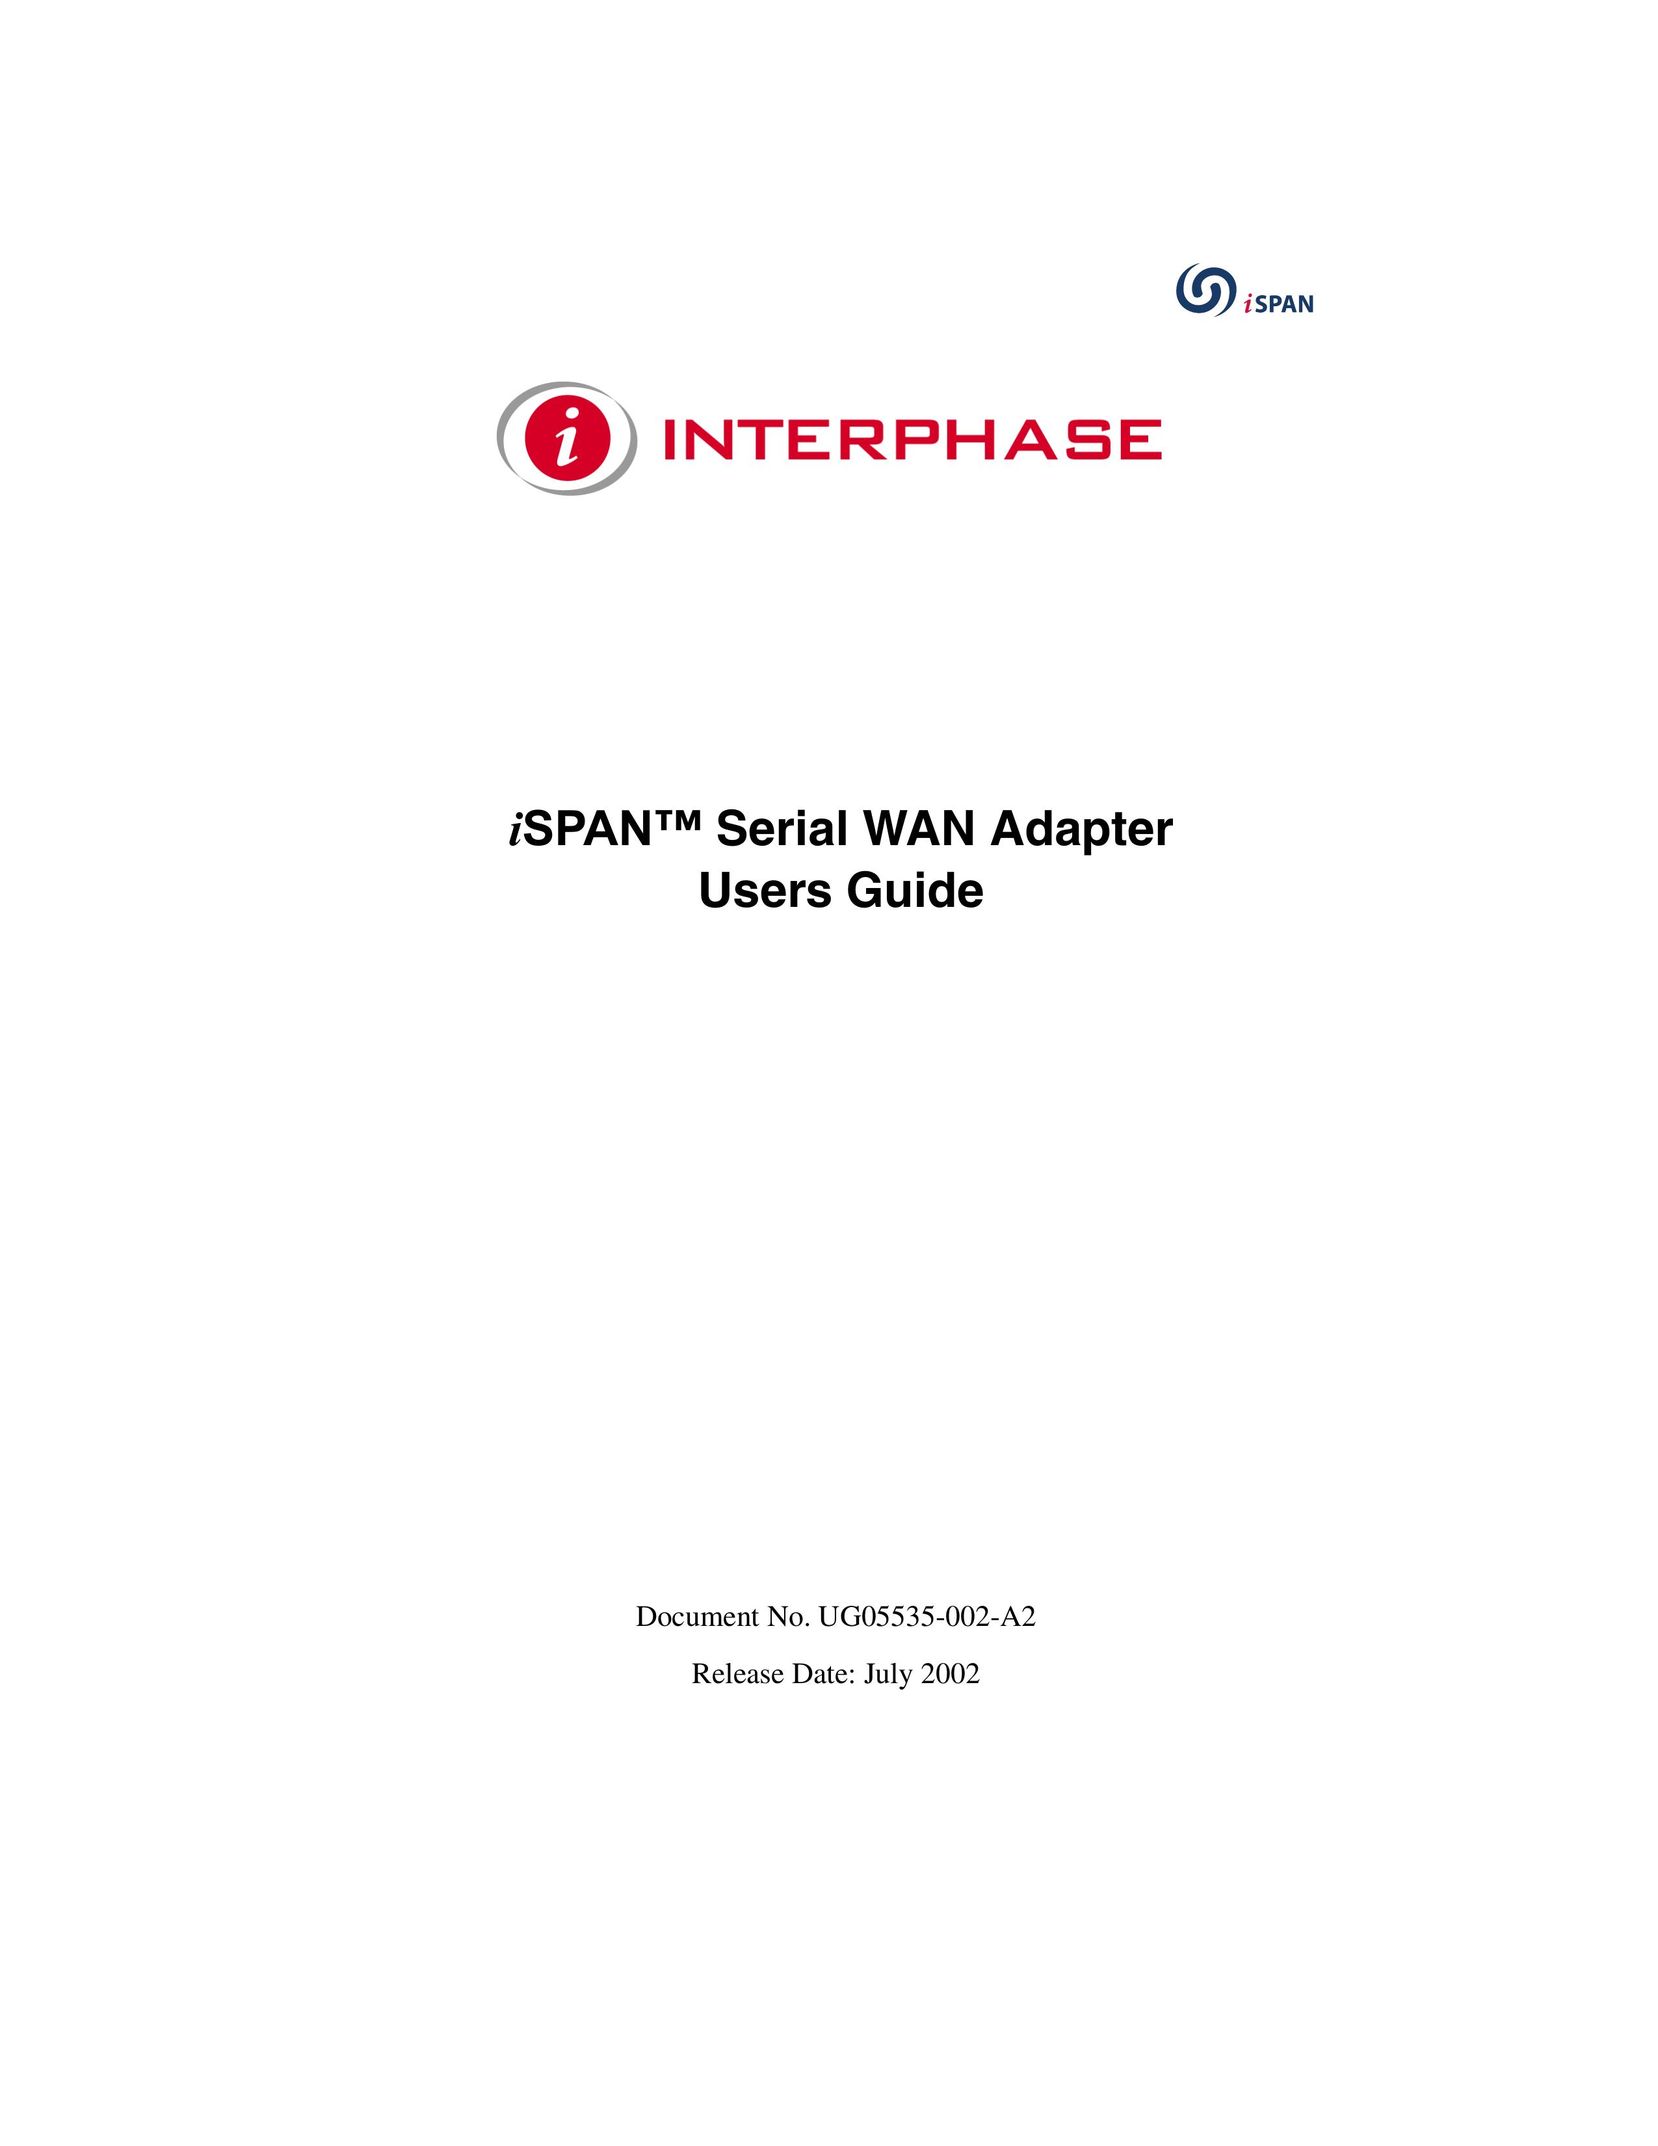 Interphase Tech iSPAN Network Card User Manual